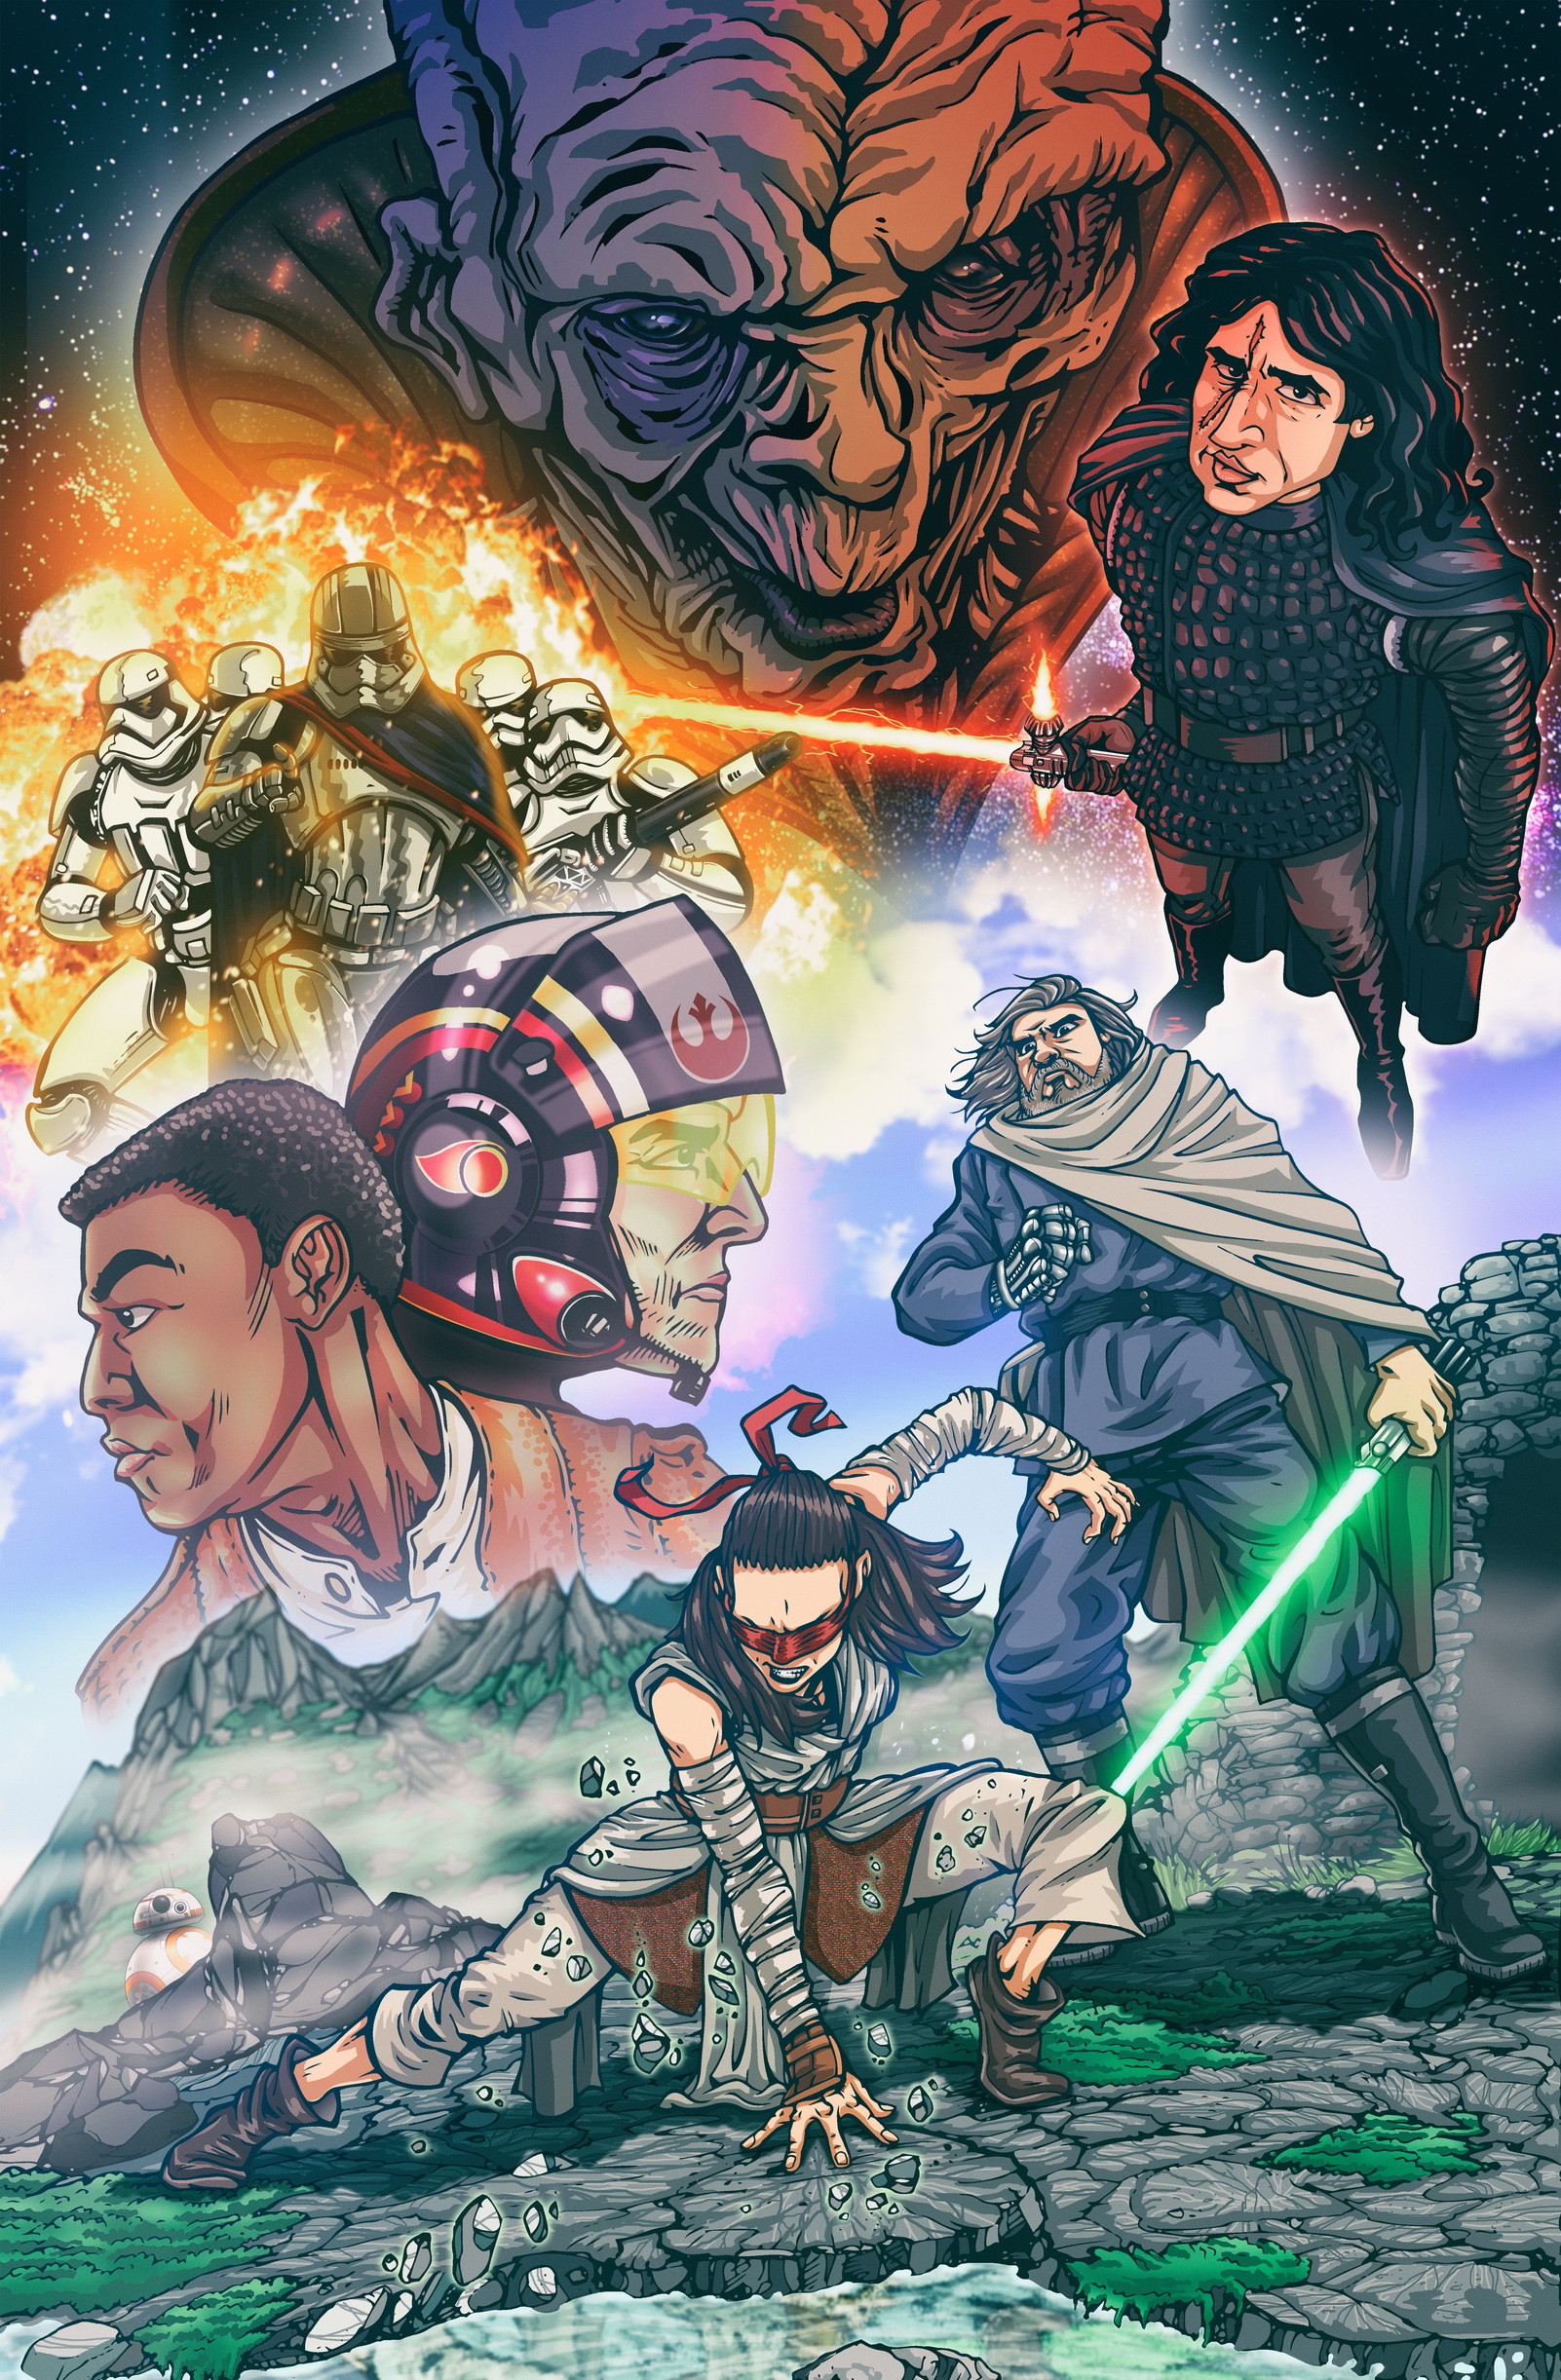 Amazing Illustrations of Star Wars: The Last Jedi